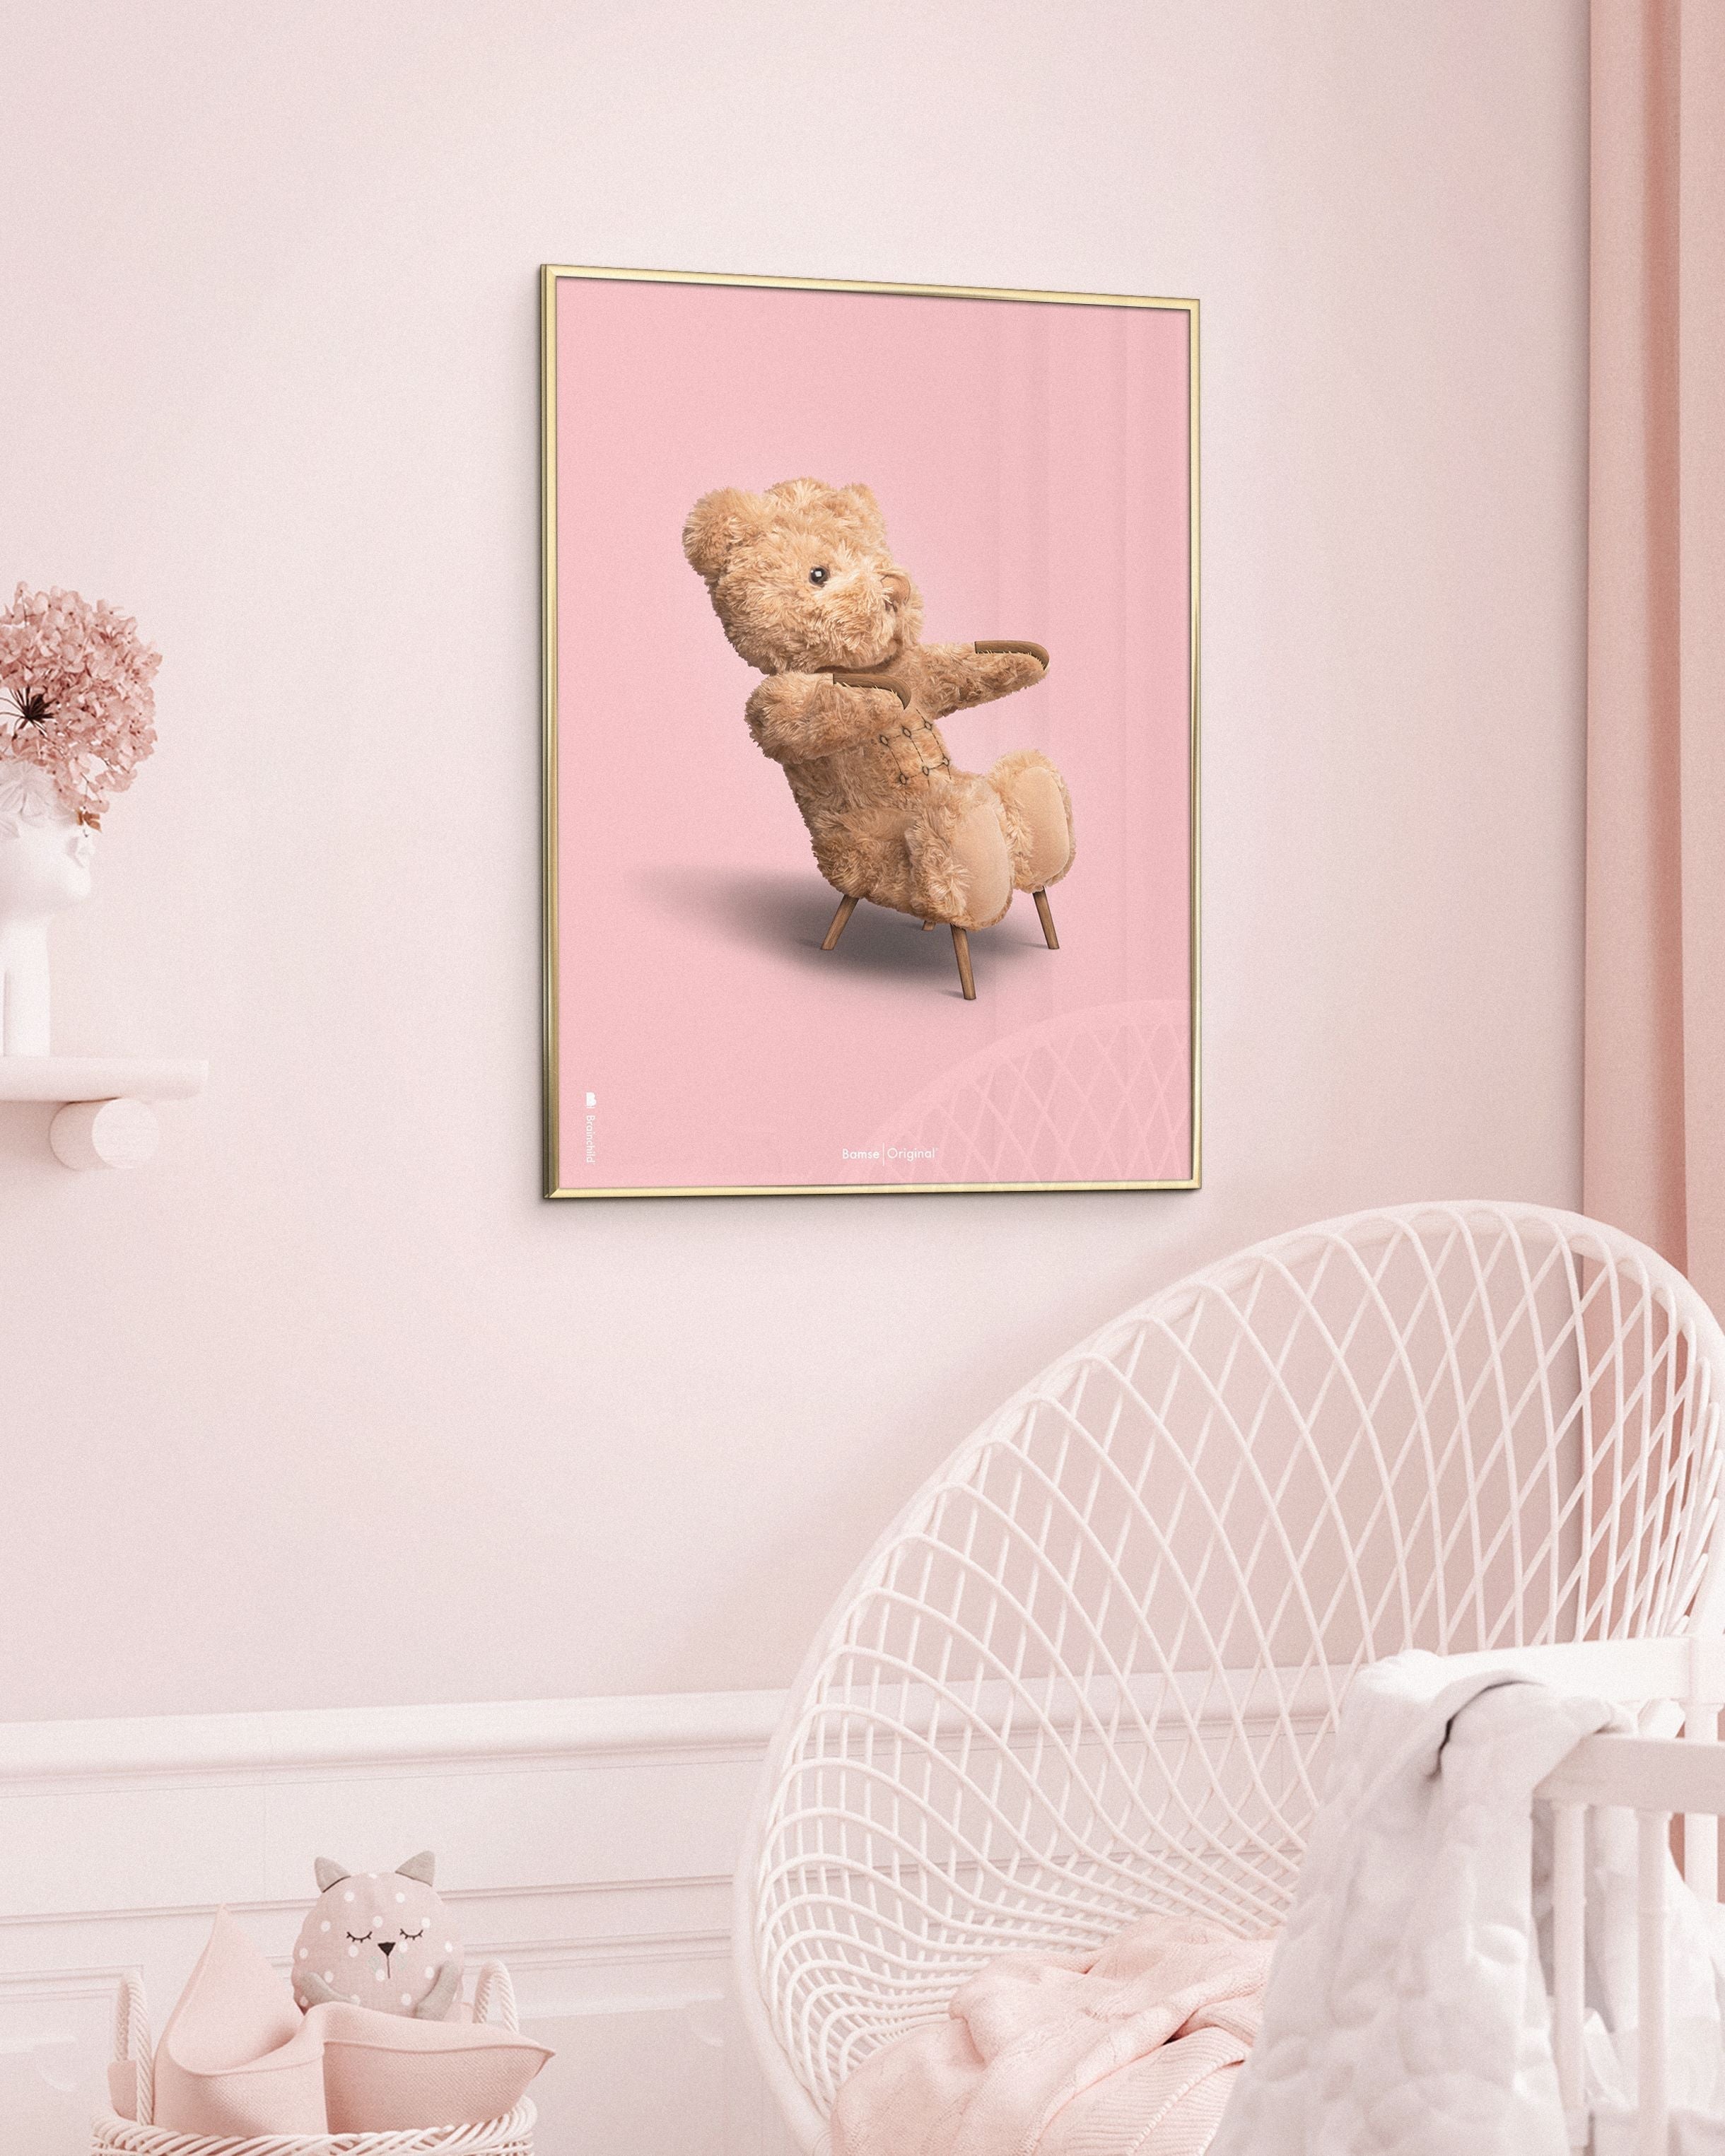 Brainchild Teddybeer klassiek poster frame gemaakt van licht hout ramme 50x70 cm, roze achtergrond